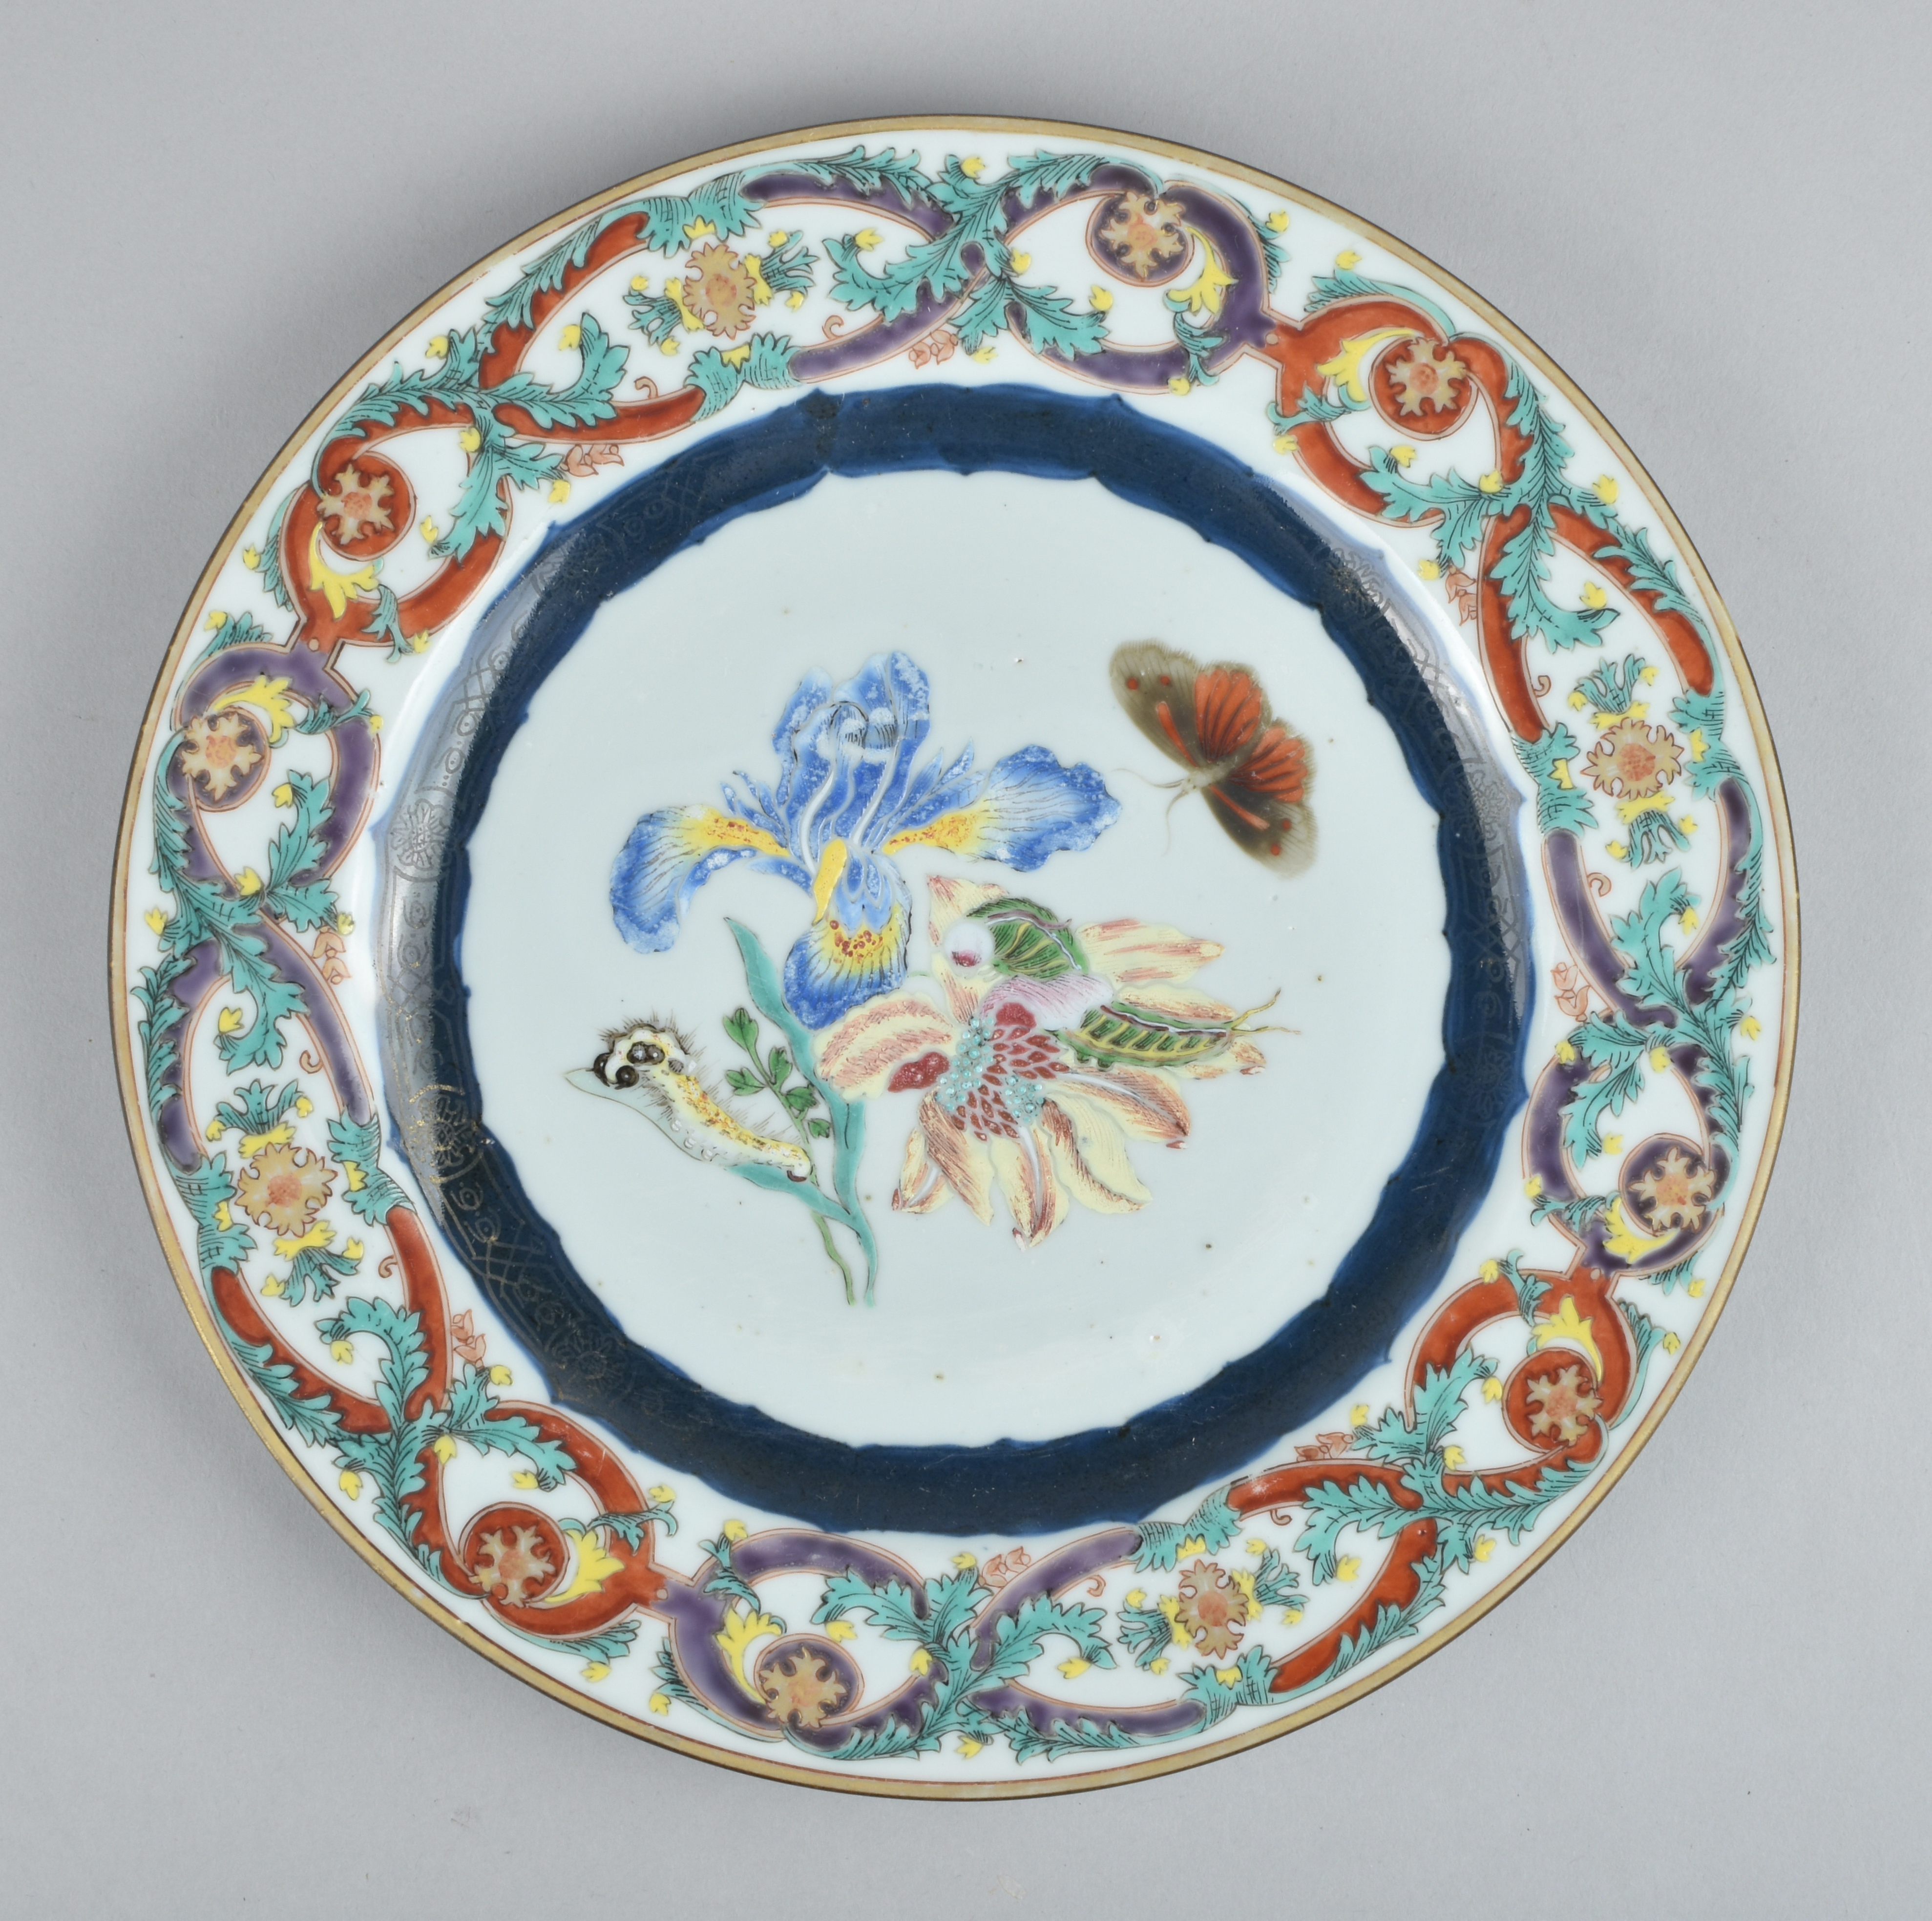 Porcelaine Qianlong (1735-1795), ca. 1738, Chine